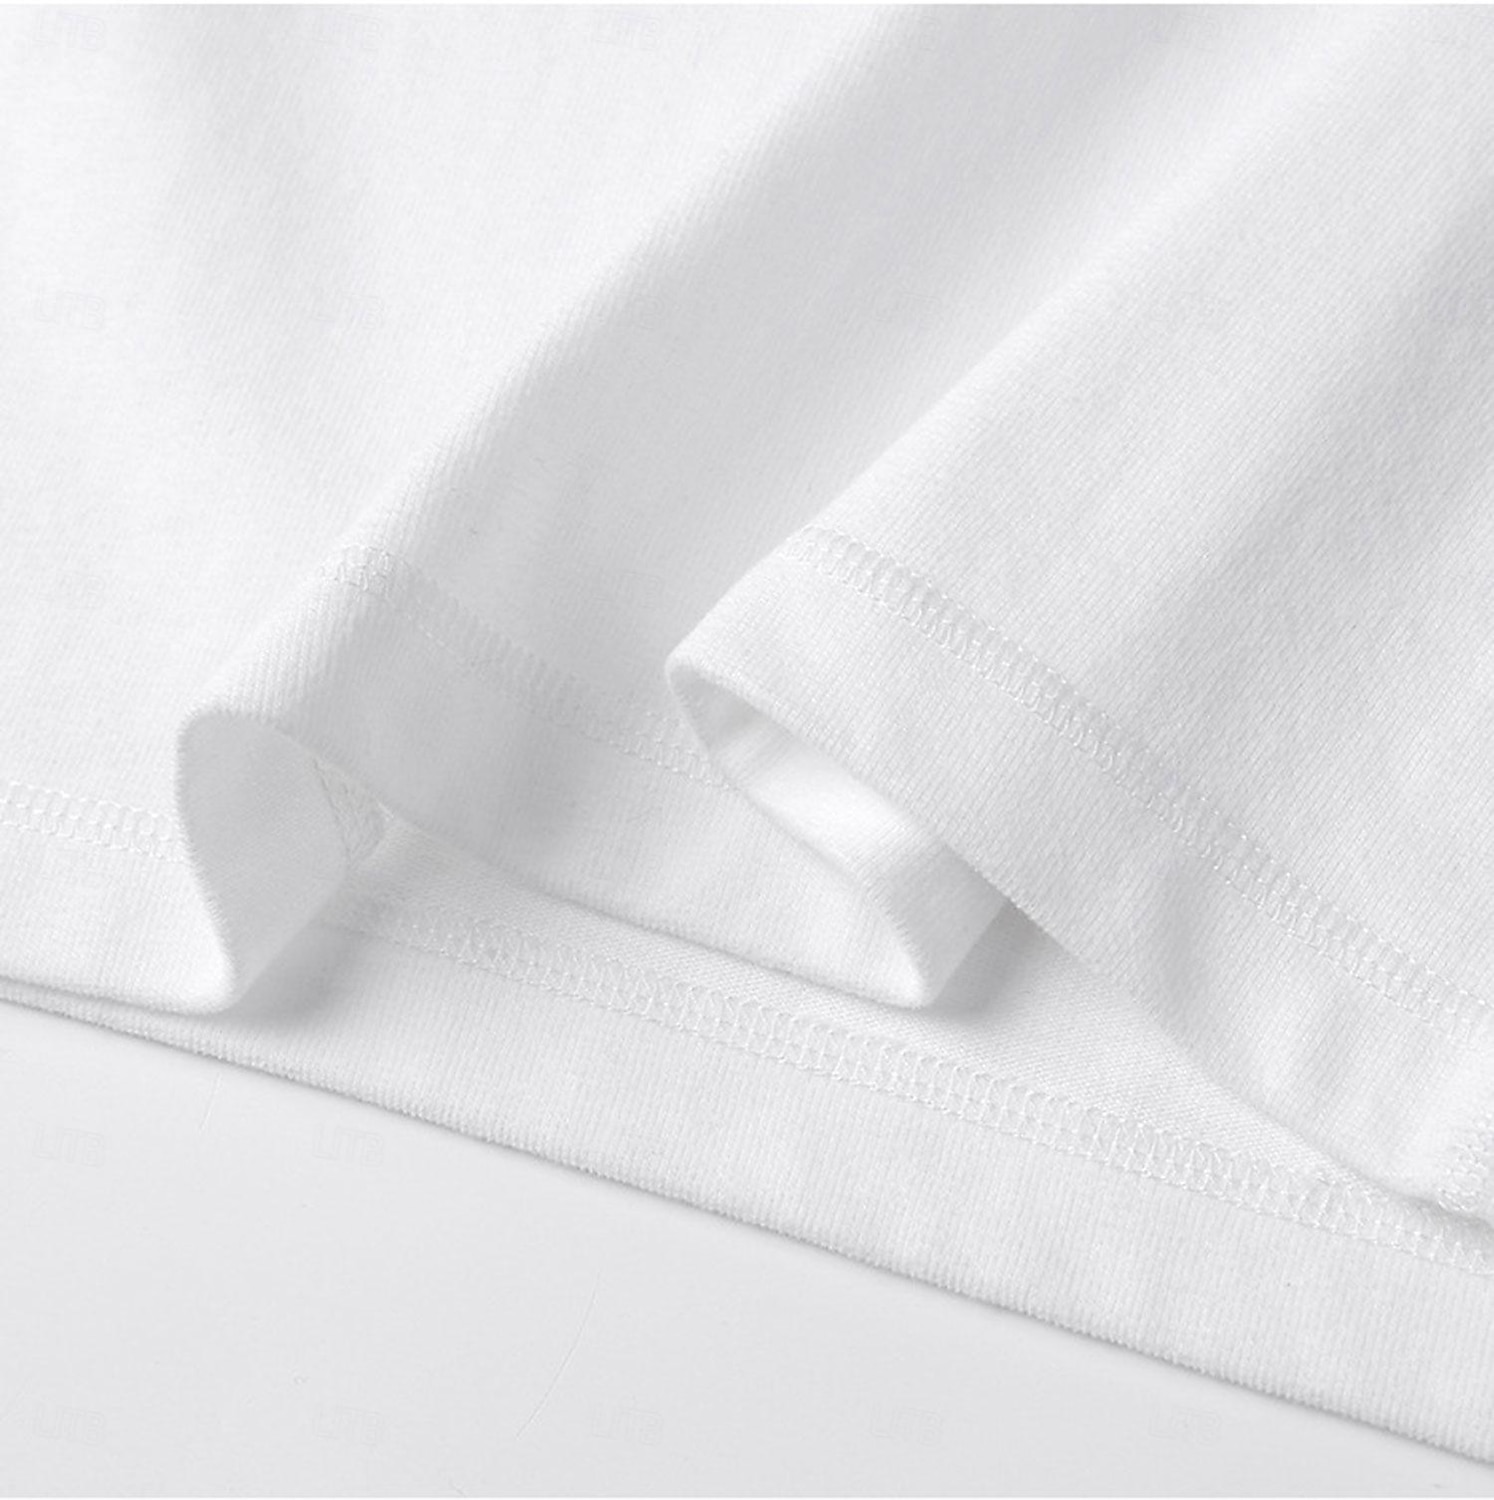 Women's T shirt Tee 100% Cotton Funny Tee Shirt Black White Graphic Cat Print Short Sleeve Casual Daily Basic Round Neck Regular 100% Cotton 3D Cat S 2024 - $18.99 –P5